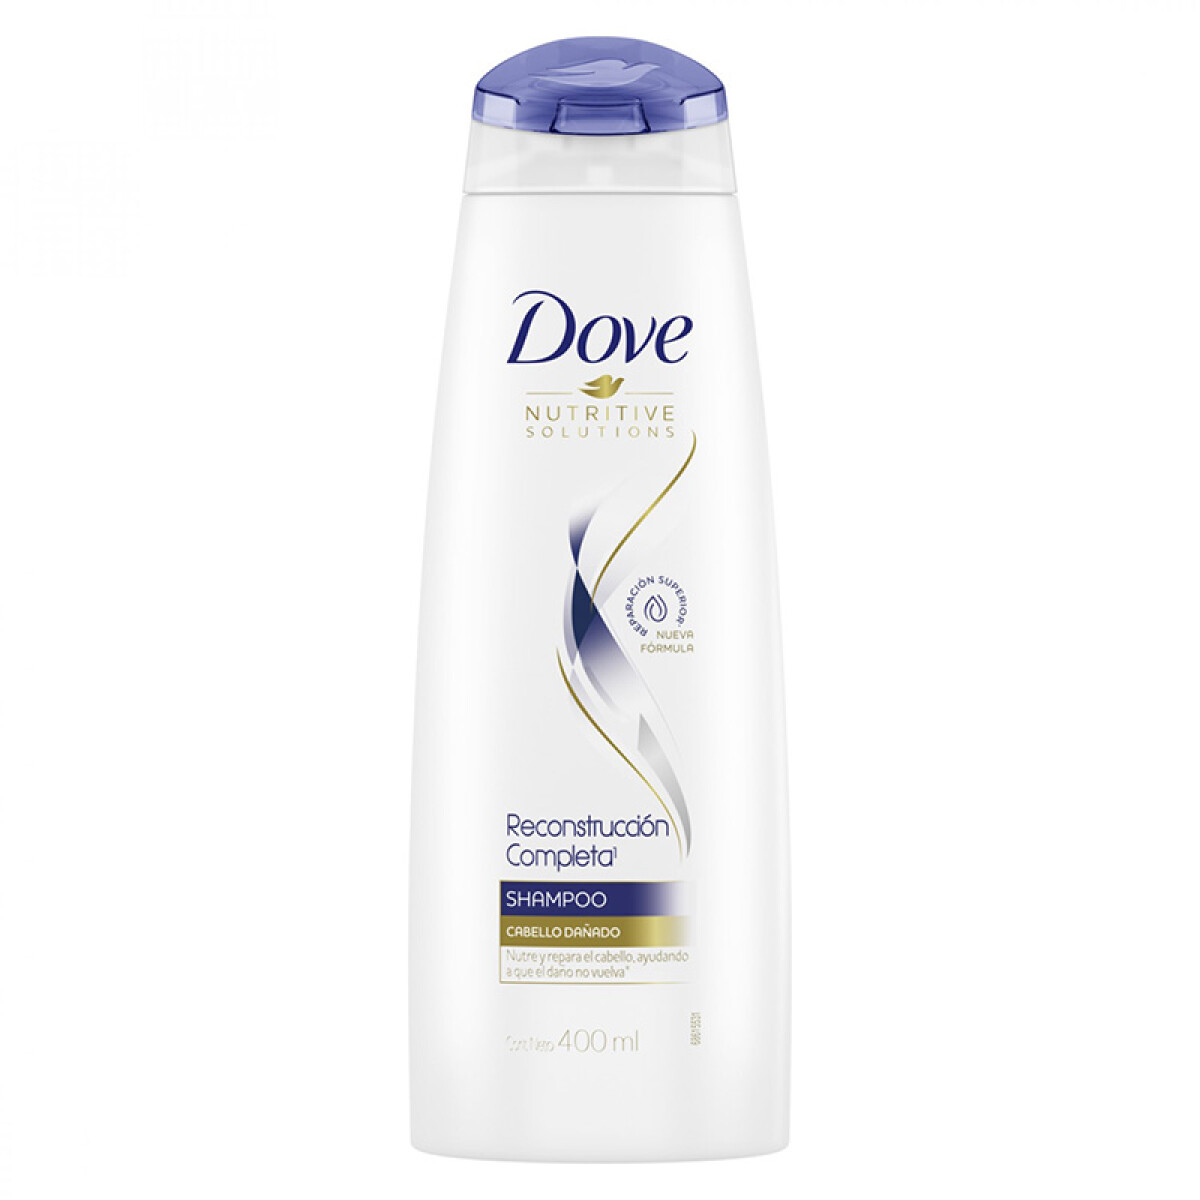 Dove shampoo - Reconstrucción completa 400 ml 